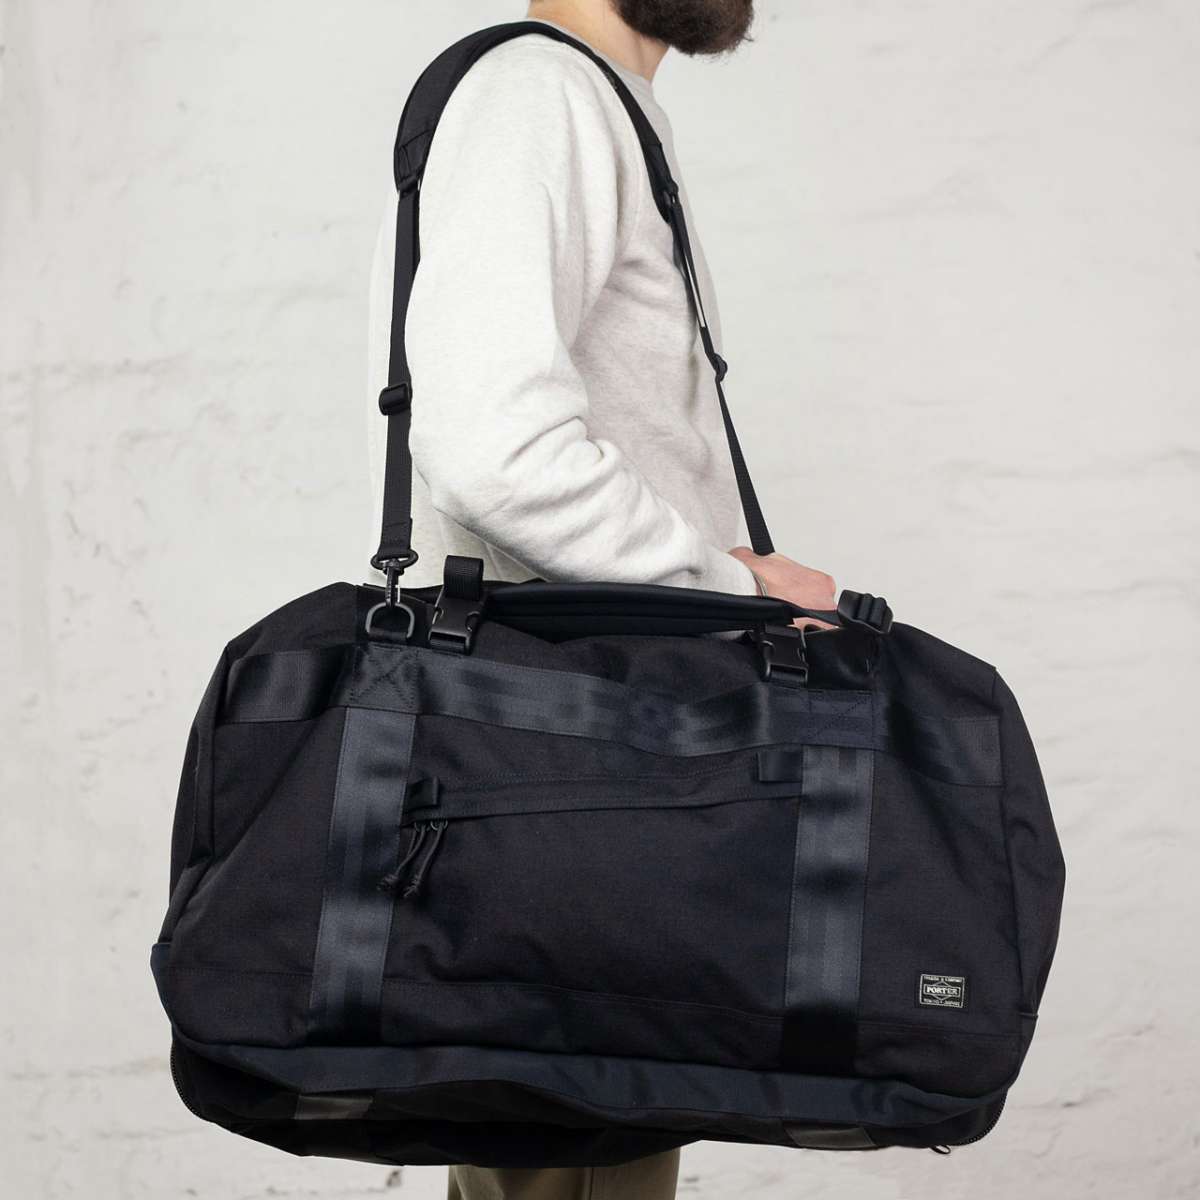 Porter-Yoshida & Co. Booth Pack 3Way Duffle Bag Schwarz | Burg 